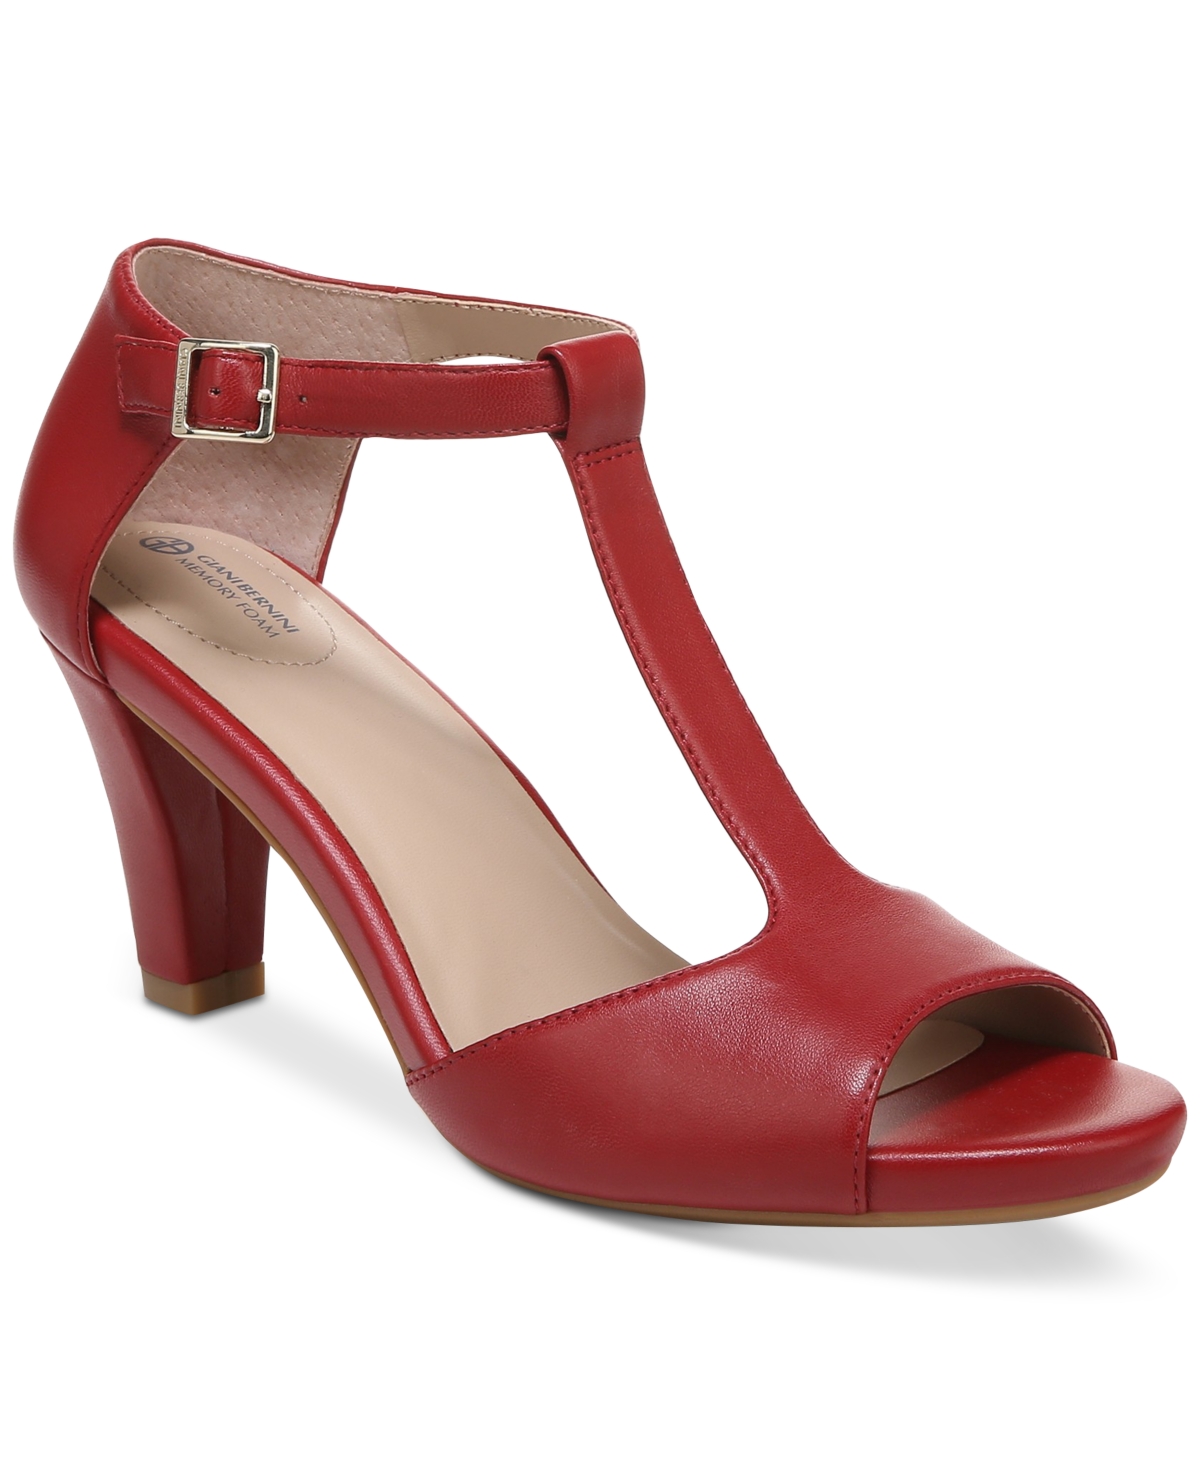 Giani Bernini Claraa Memory Foam Dress Sandals, Created for Macy's Women's Shoes